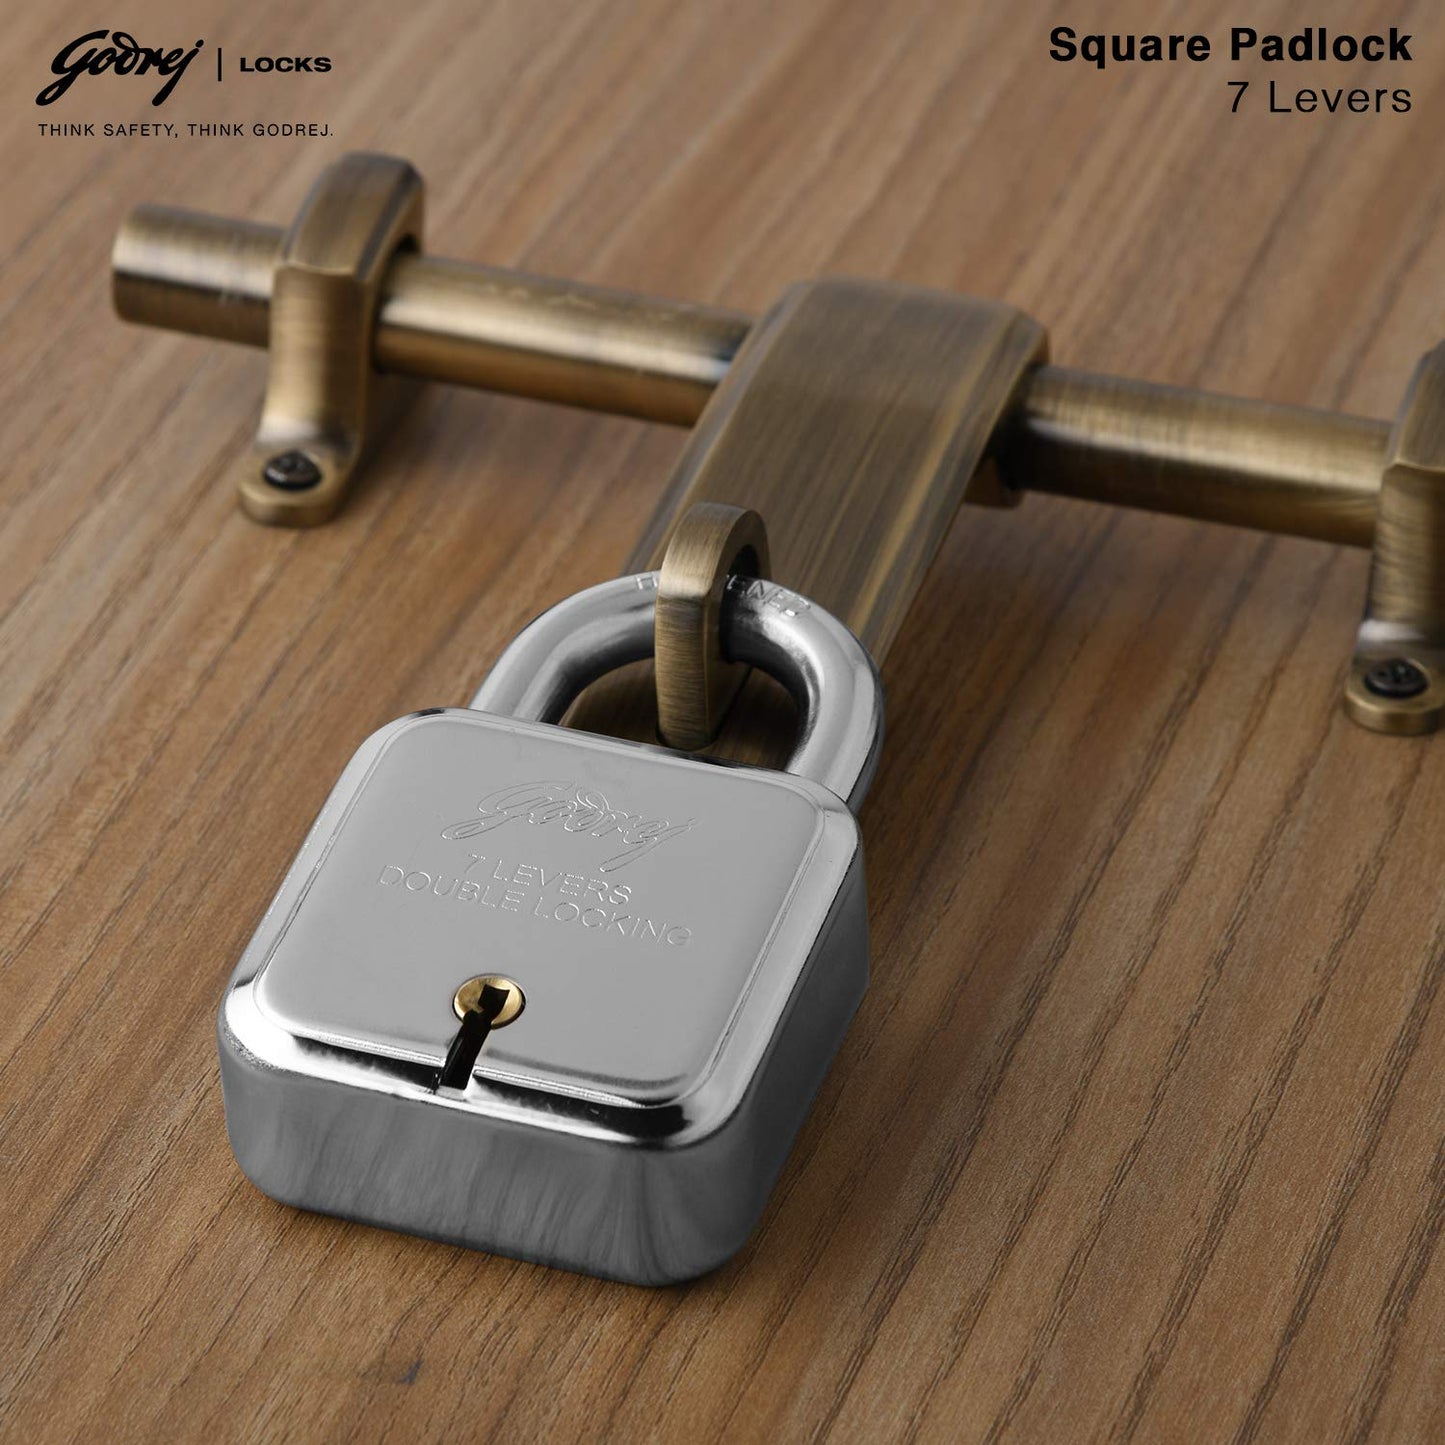 Godrej (C-8153) 60mm 7 Levers Square Padlock - 4 Keys